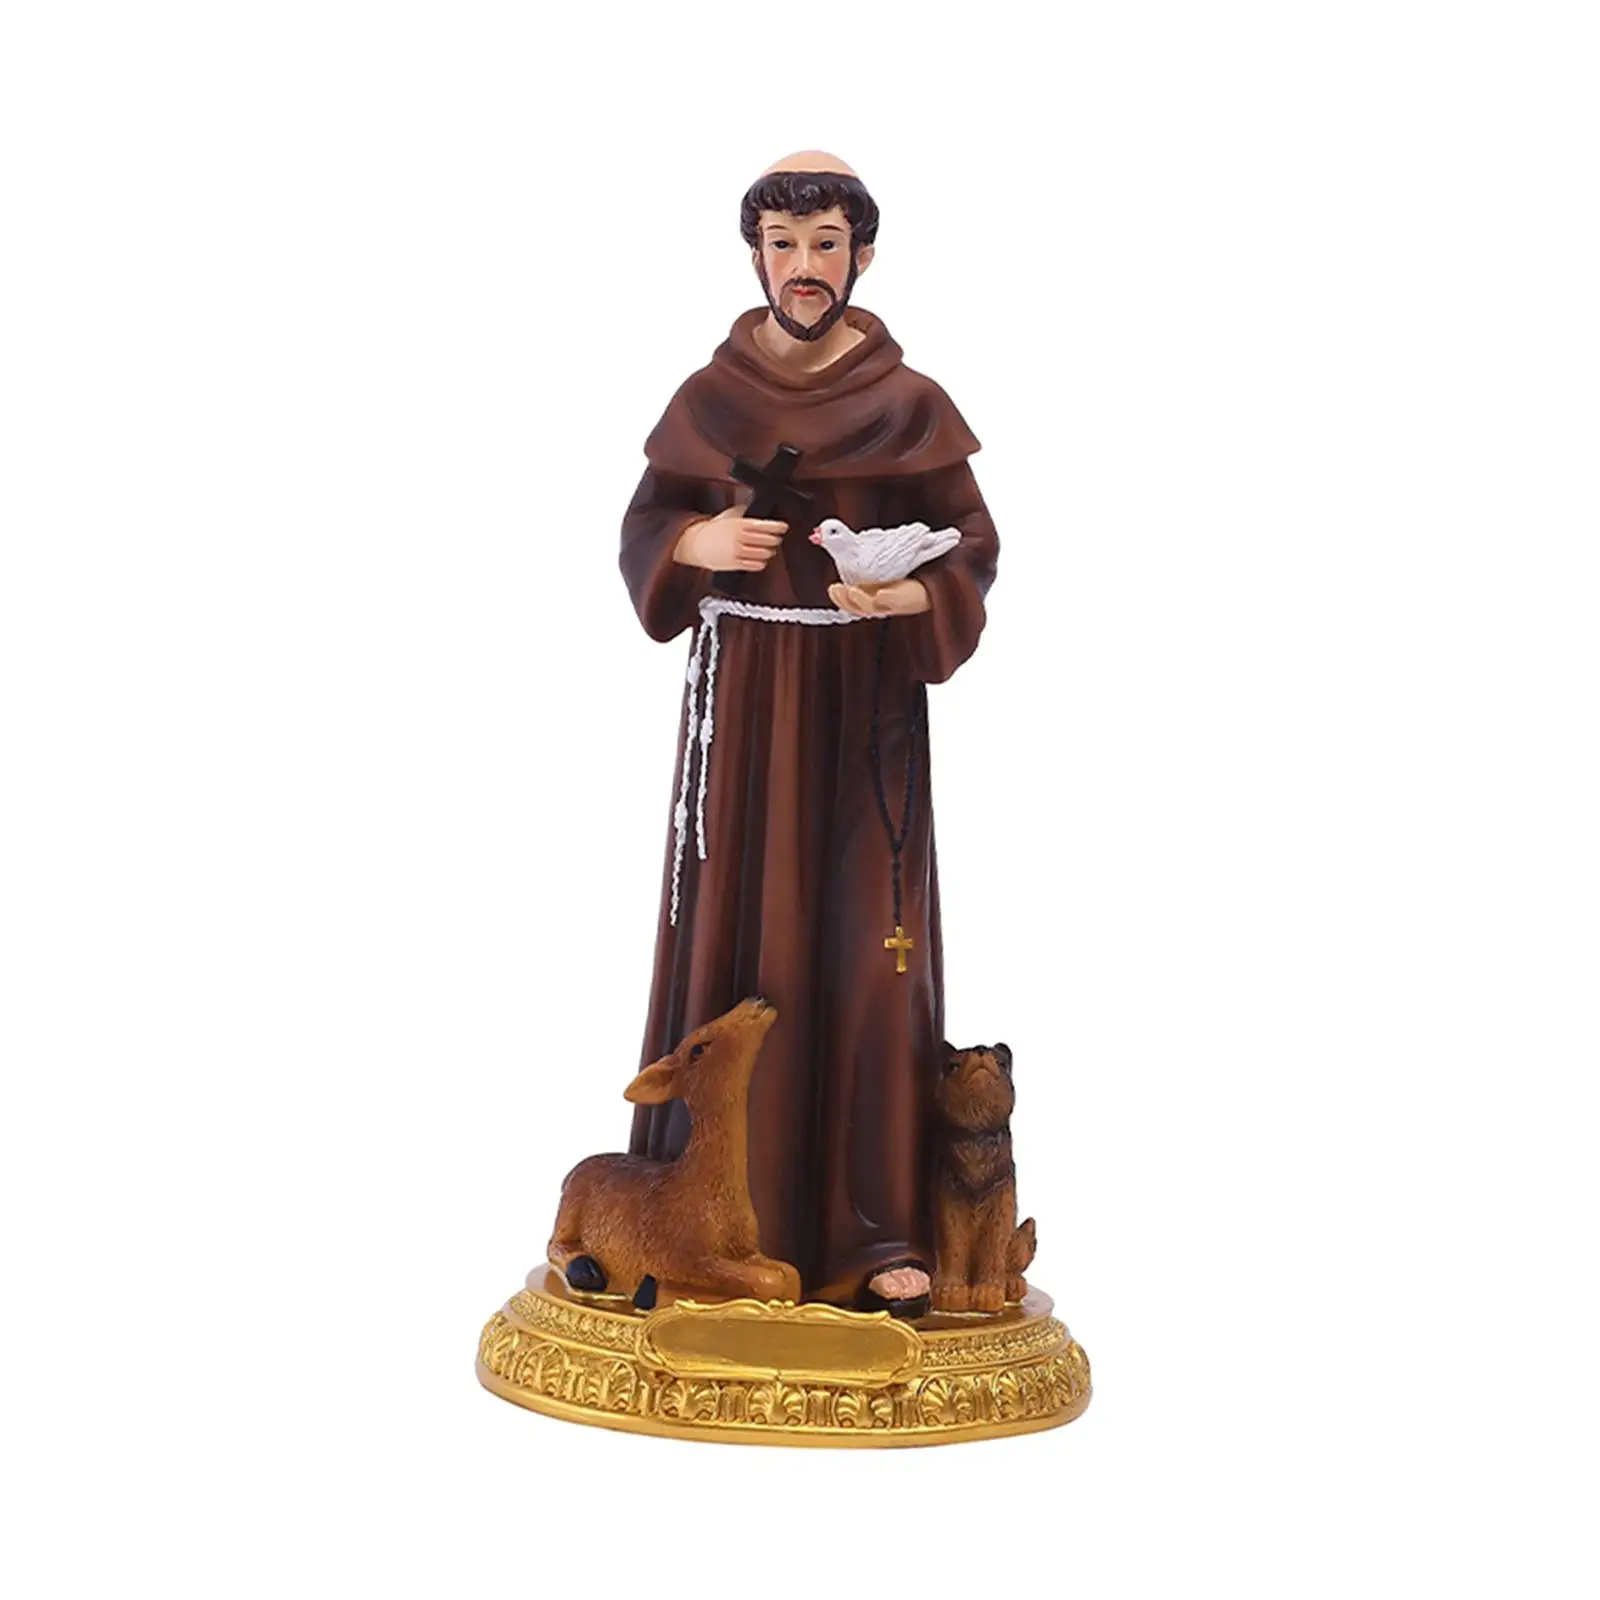 Saint Francis of Assisi Statue Catholic Statues 8.6